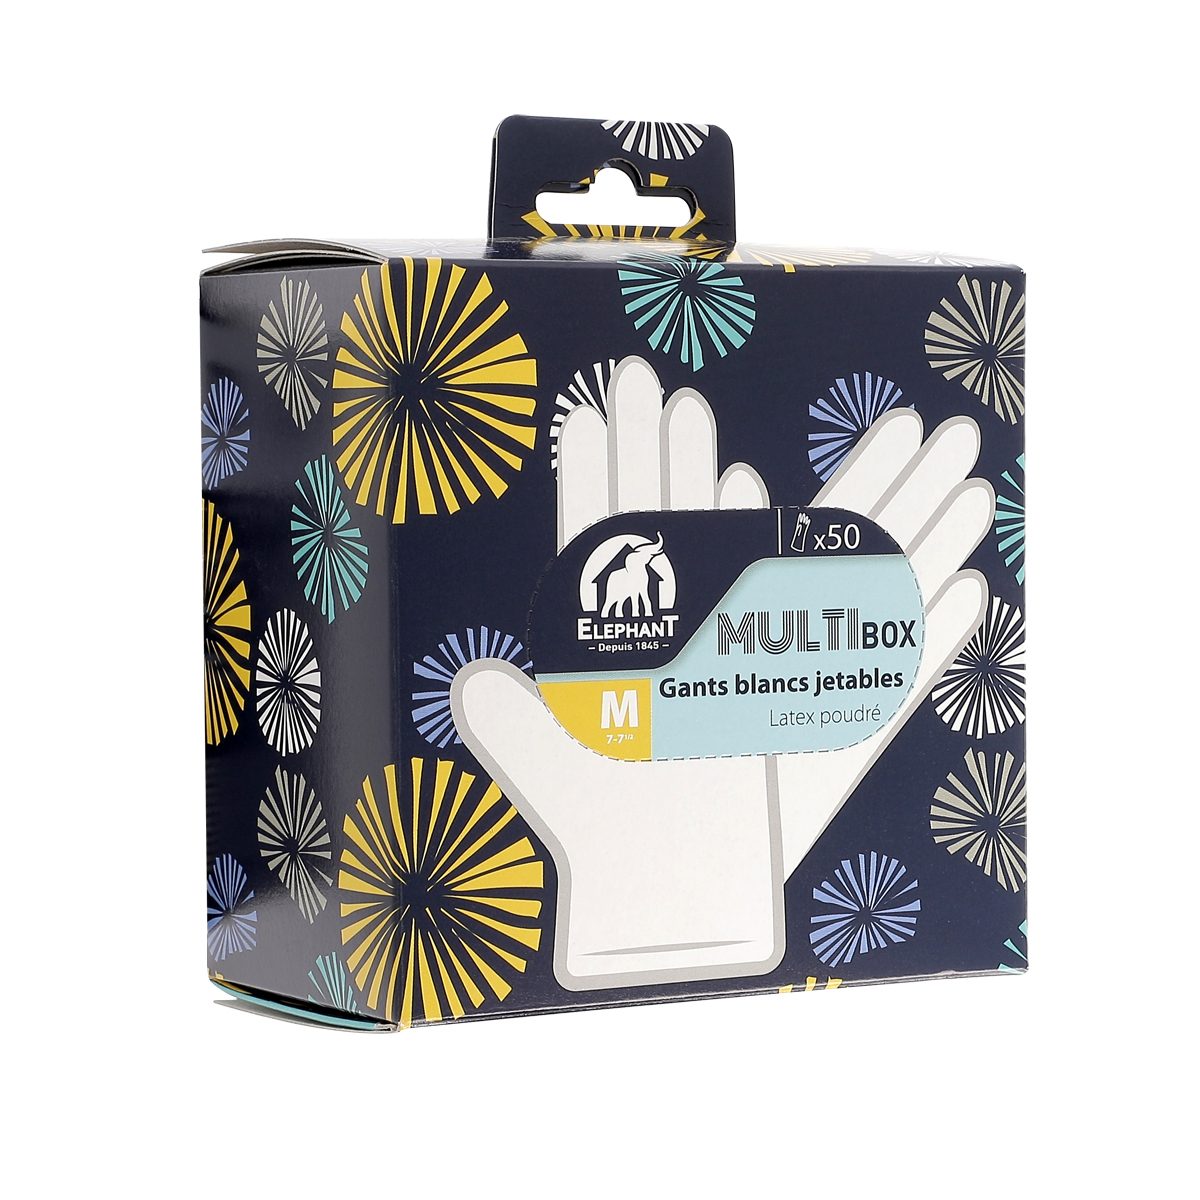 Multi Box gants latex x50 - Taille M - Elephant Maison